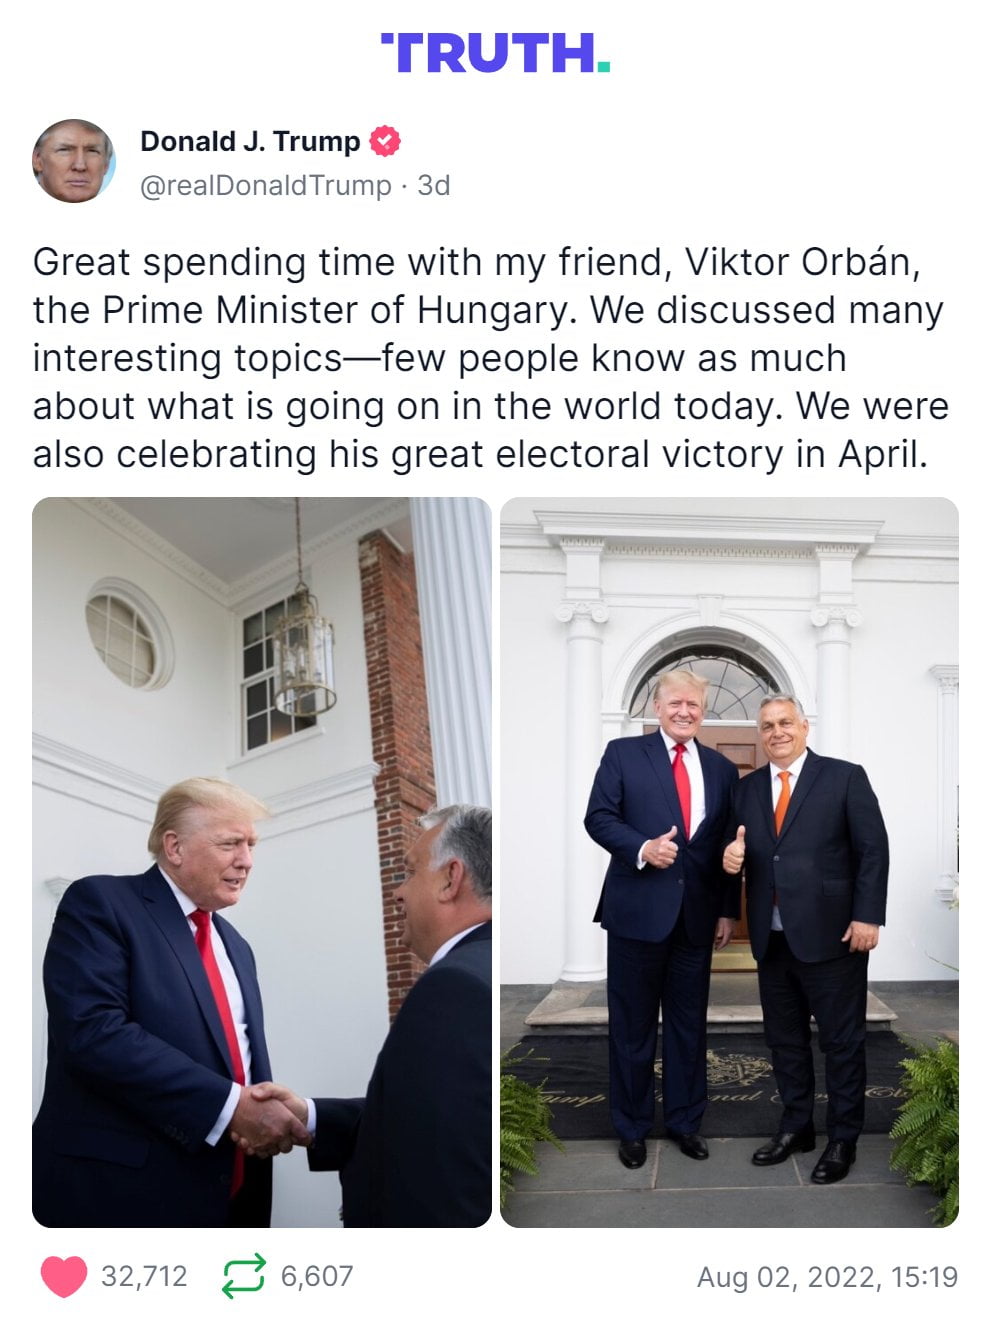 Trump met with Viktor Orbán of Hungary